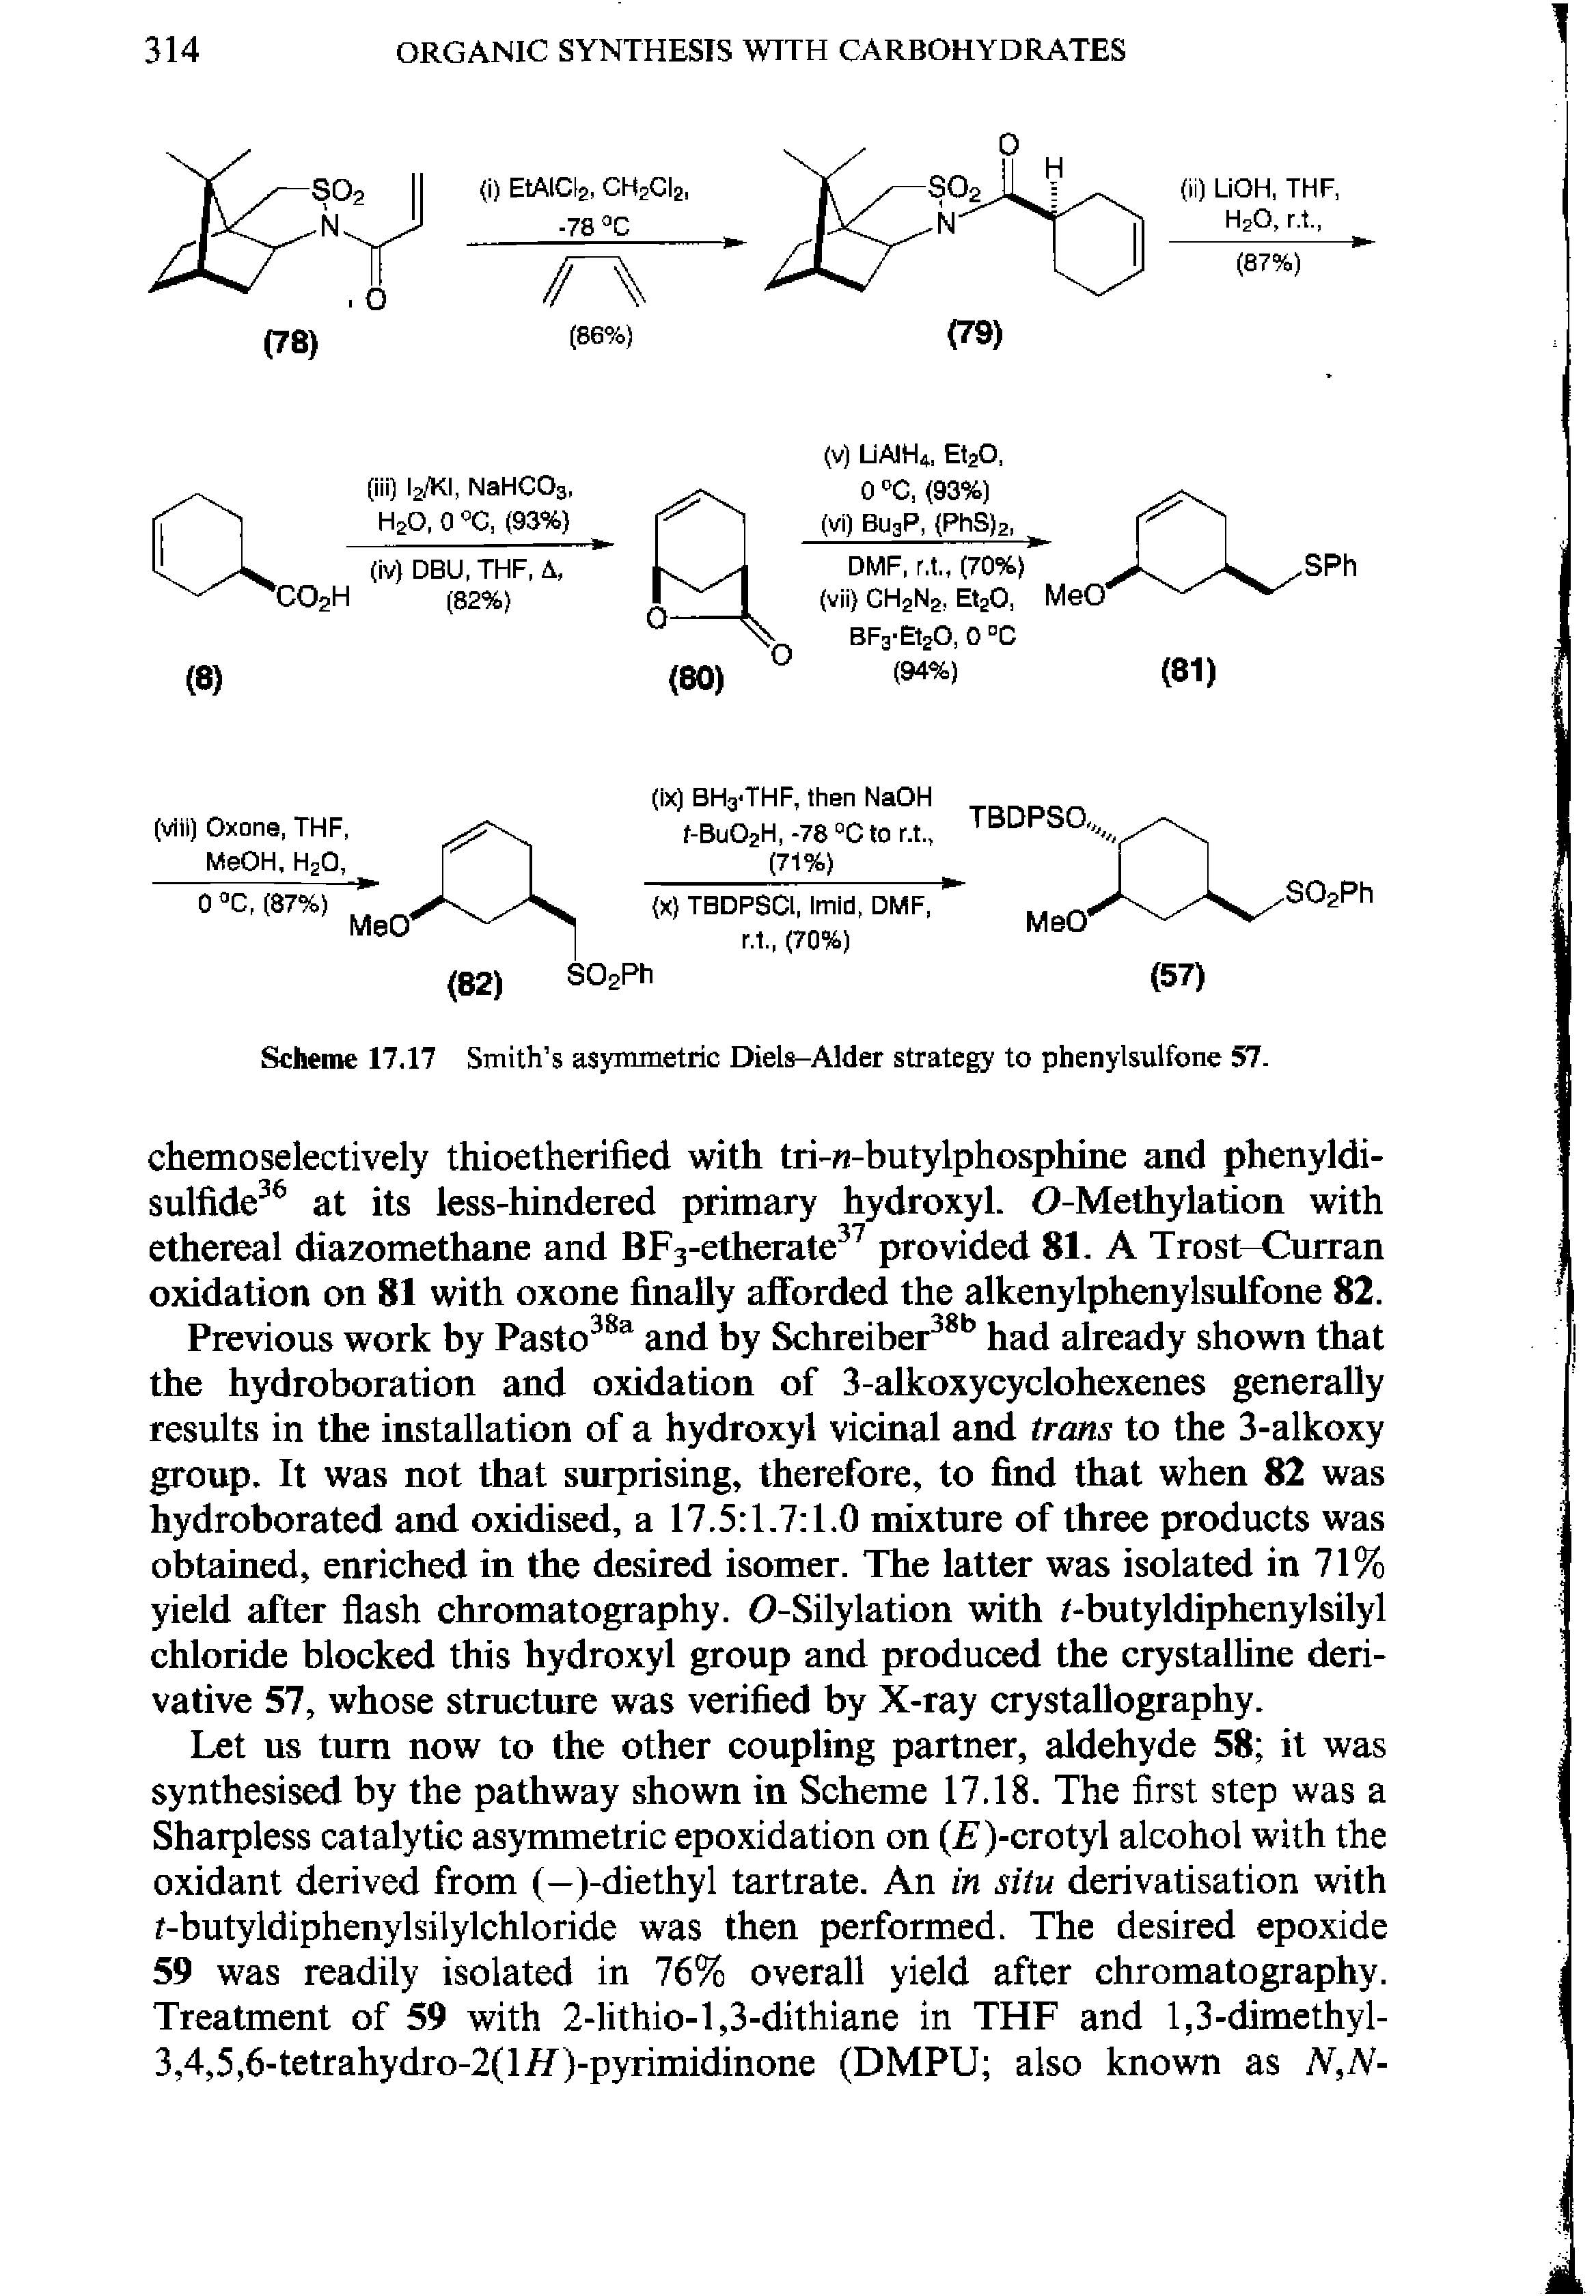 Scheme 17.17 Smith s asymmetric Diels-Alder strategy to phenylsulfcne 57.